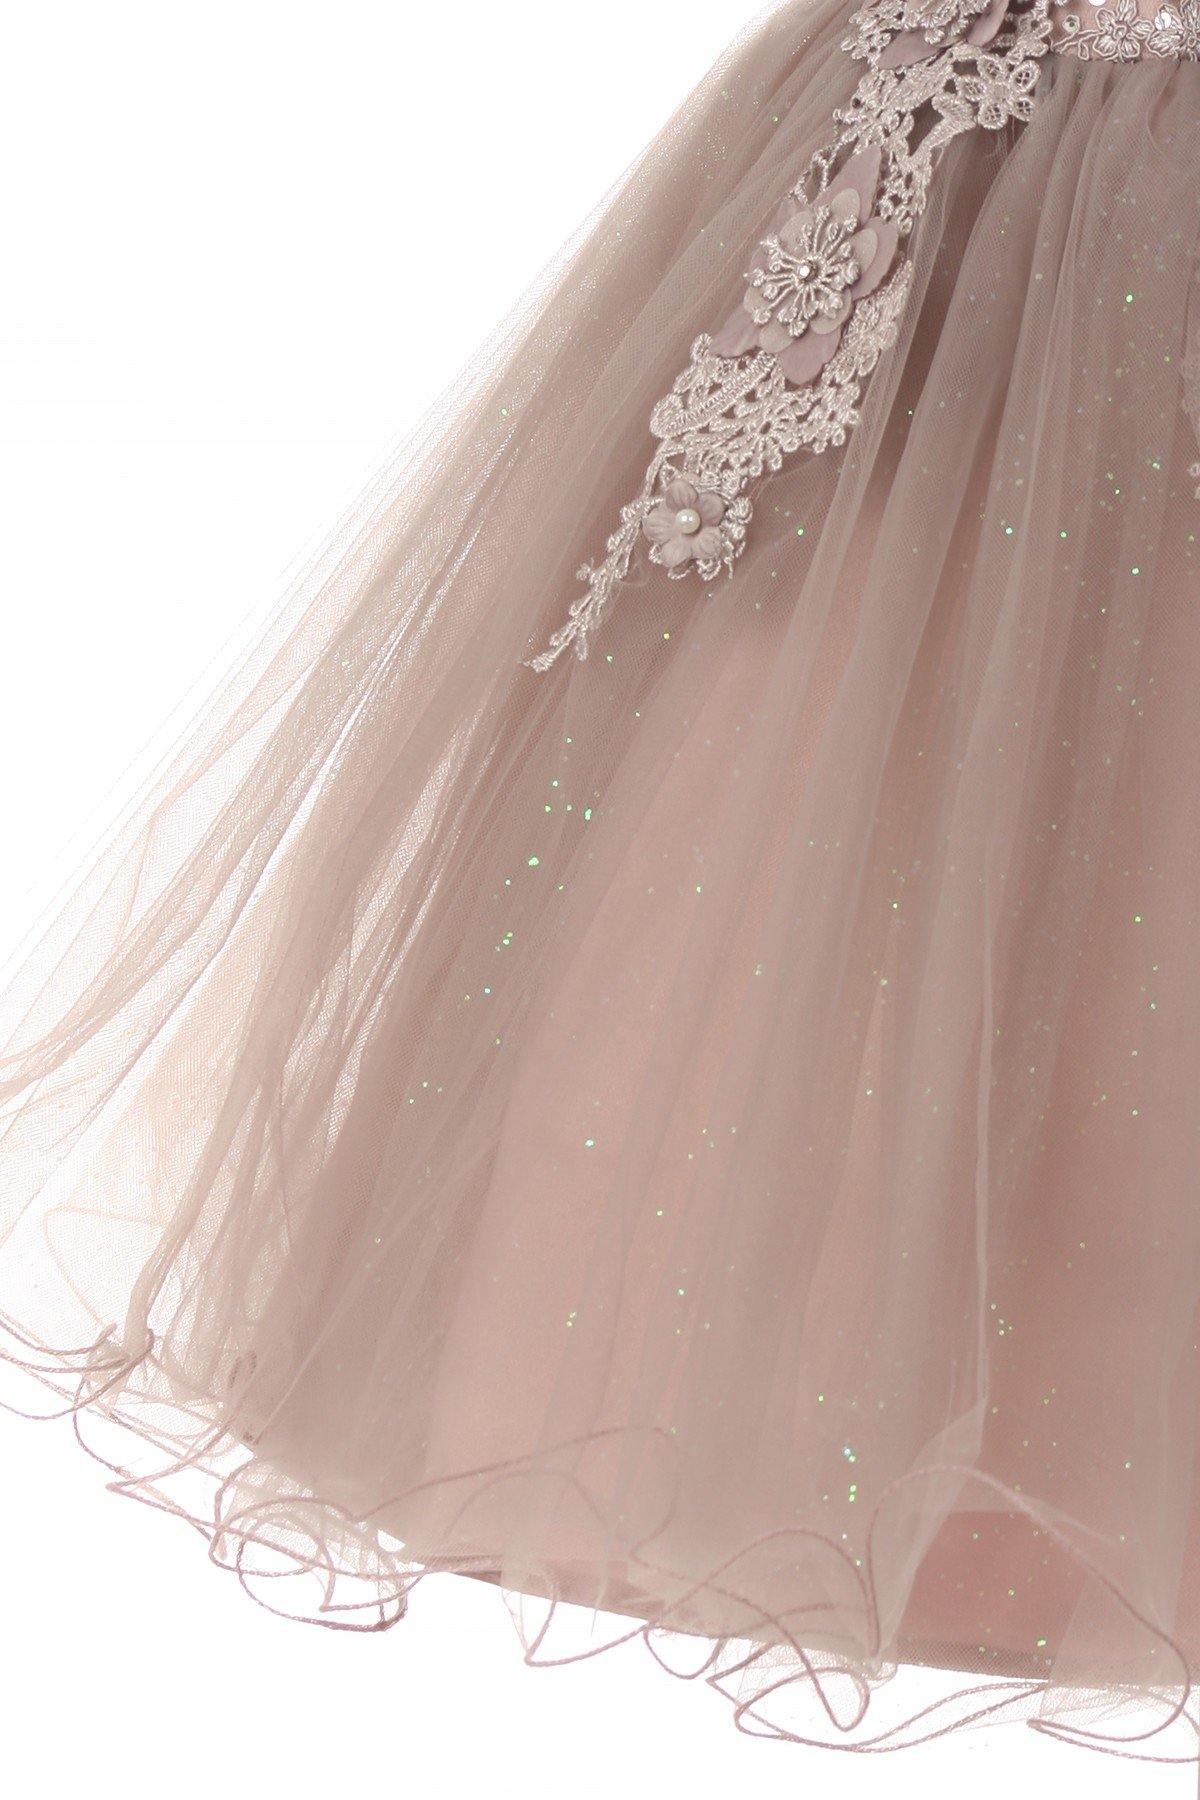 Short Sleeve Embellished Party Flower Girls Dress - The Dress Outlet Cinderella Couture